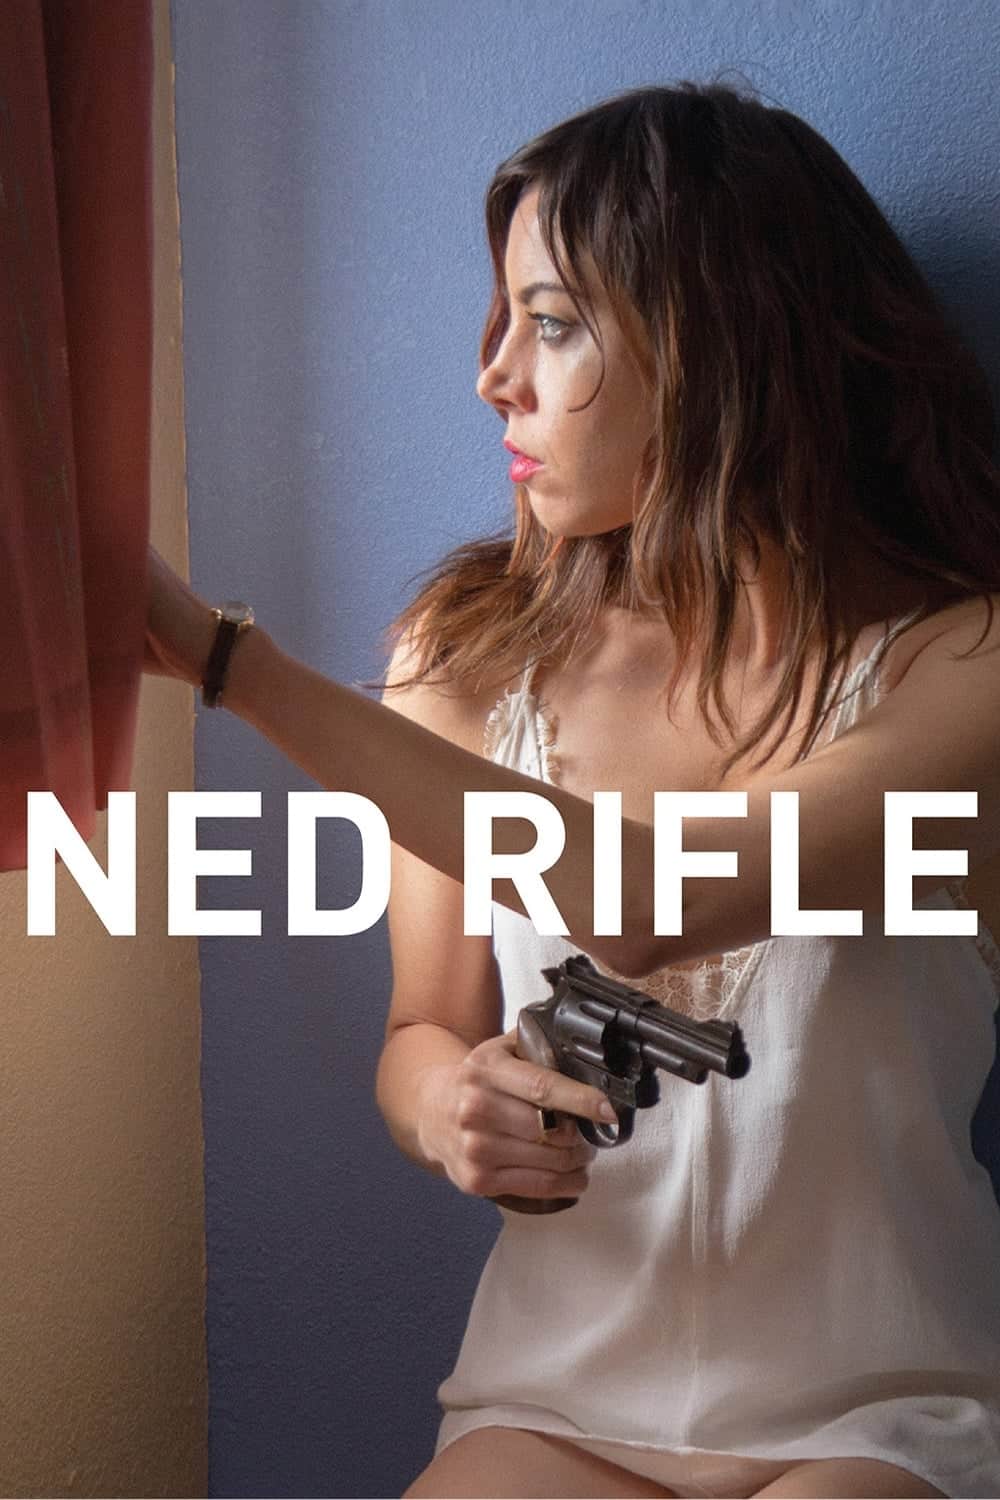 Ned Rifle, 2014 